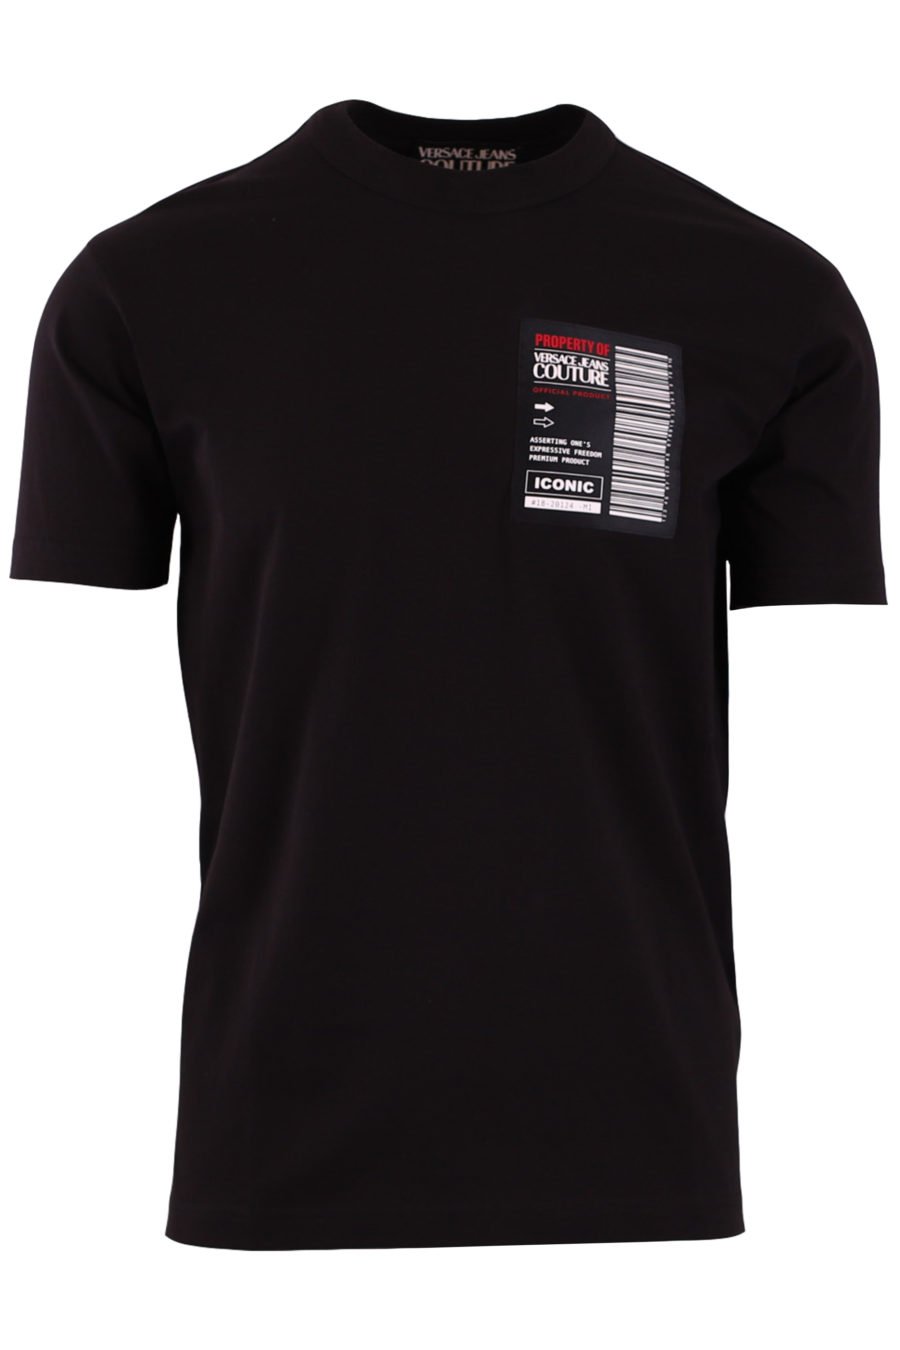 Camiseta negra con logo código de barras - 338ee3517824a309f66f9b2ad799344353a8c4c4